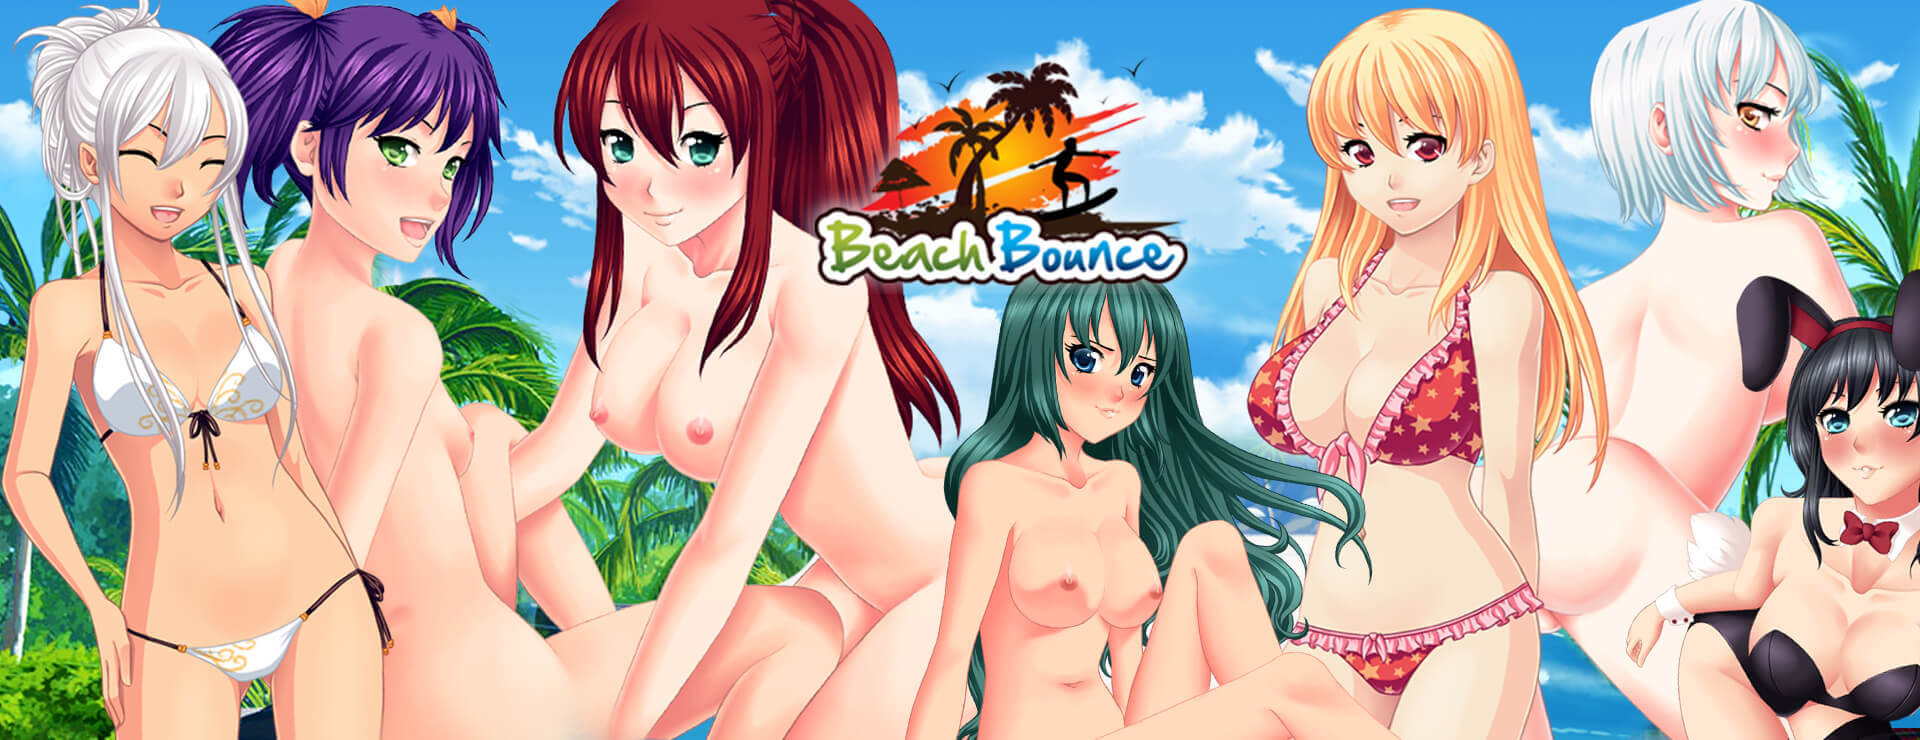 Beach Bounce - Visual Novel Game